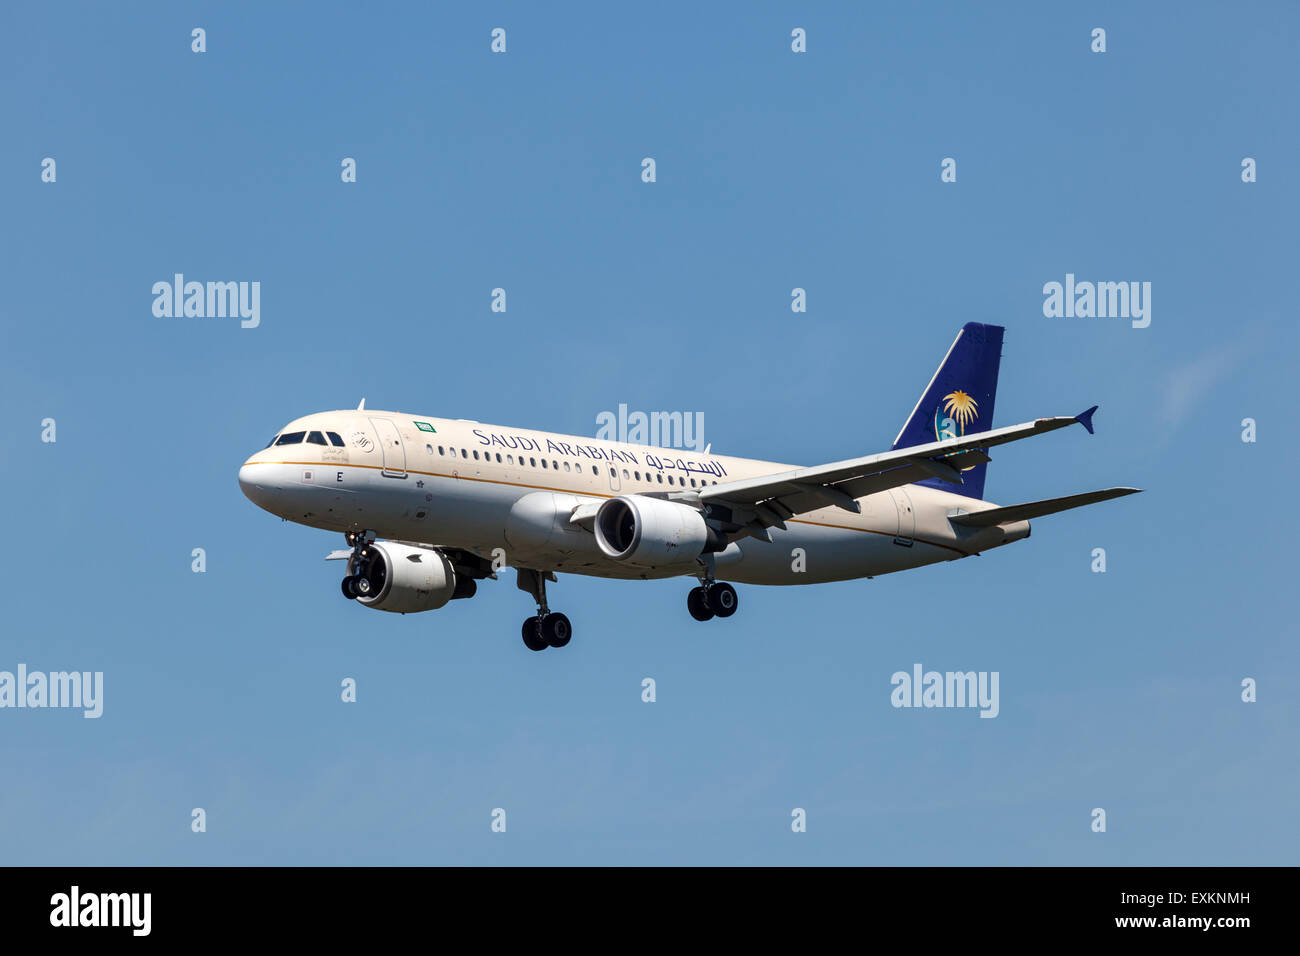 Airbus A320 aircraft of the Saudi Arabian airline landing at the international airport in Frankfurt. July 10, 2015 in Frankfurt Stock Photo